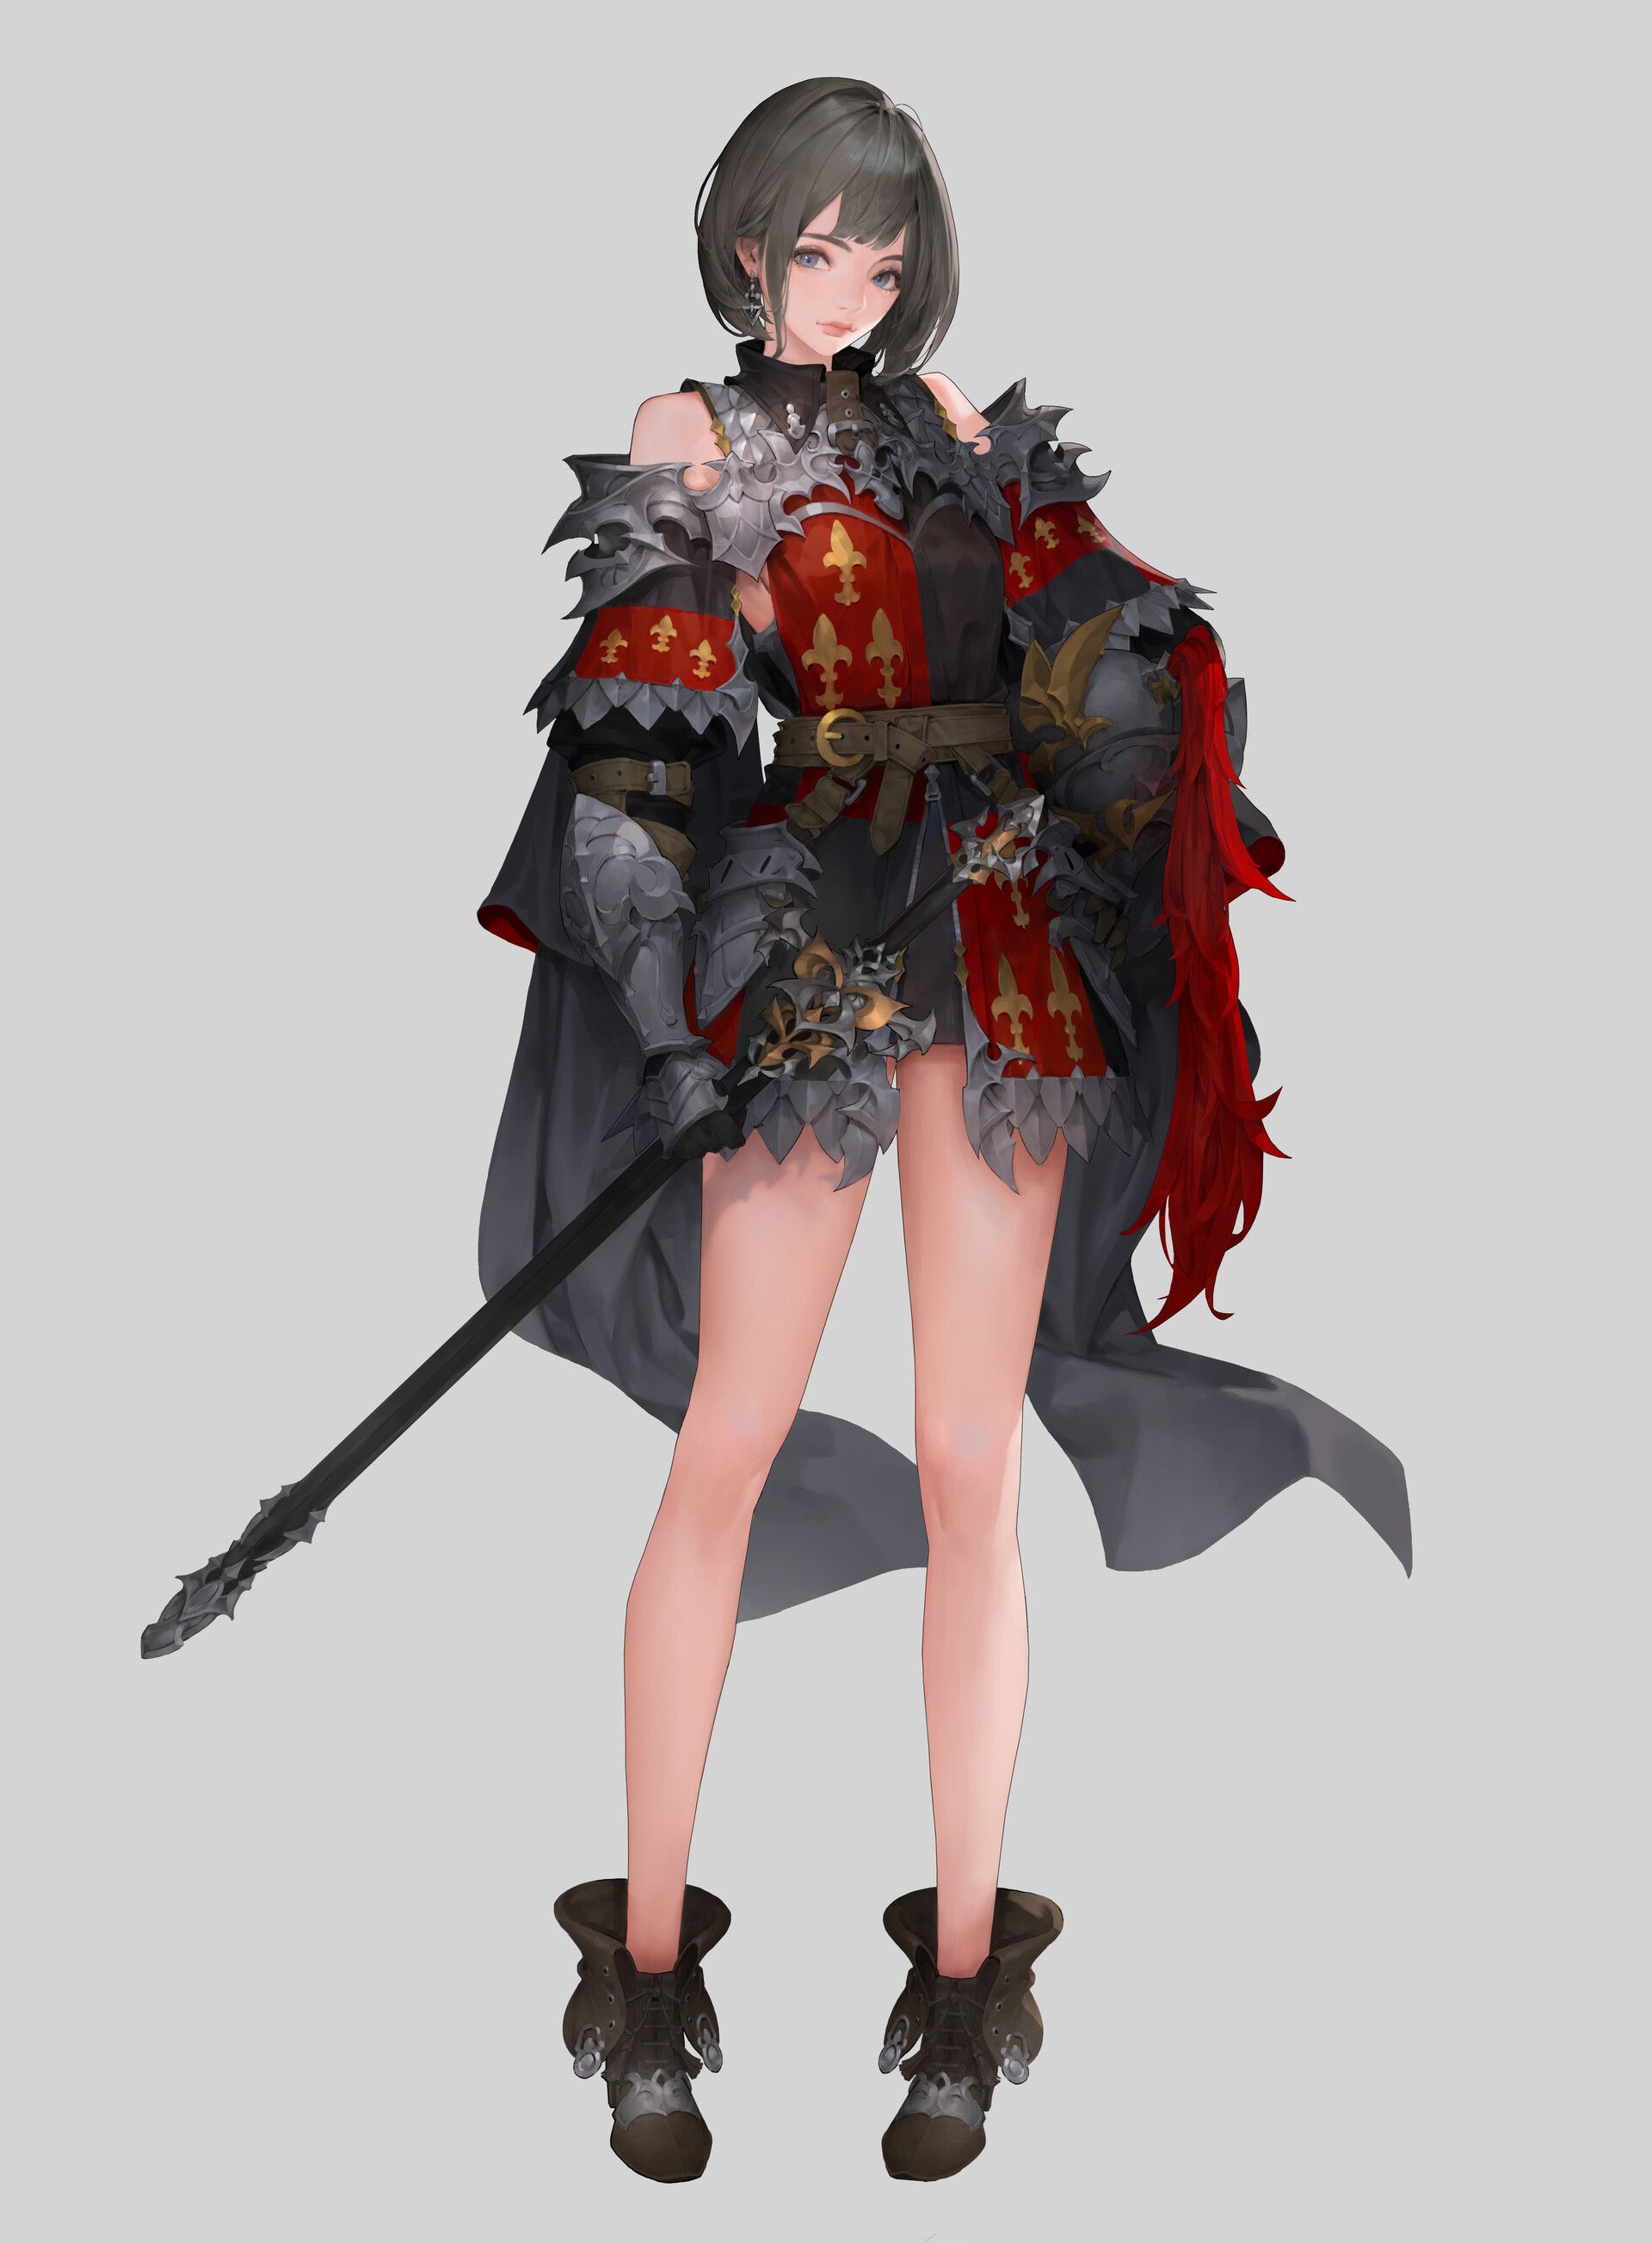 Male Anime Knight Armor